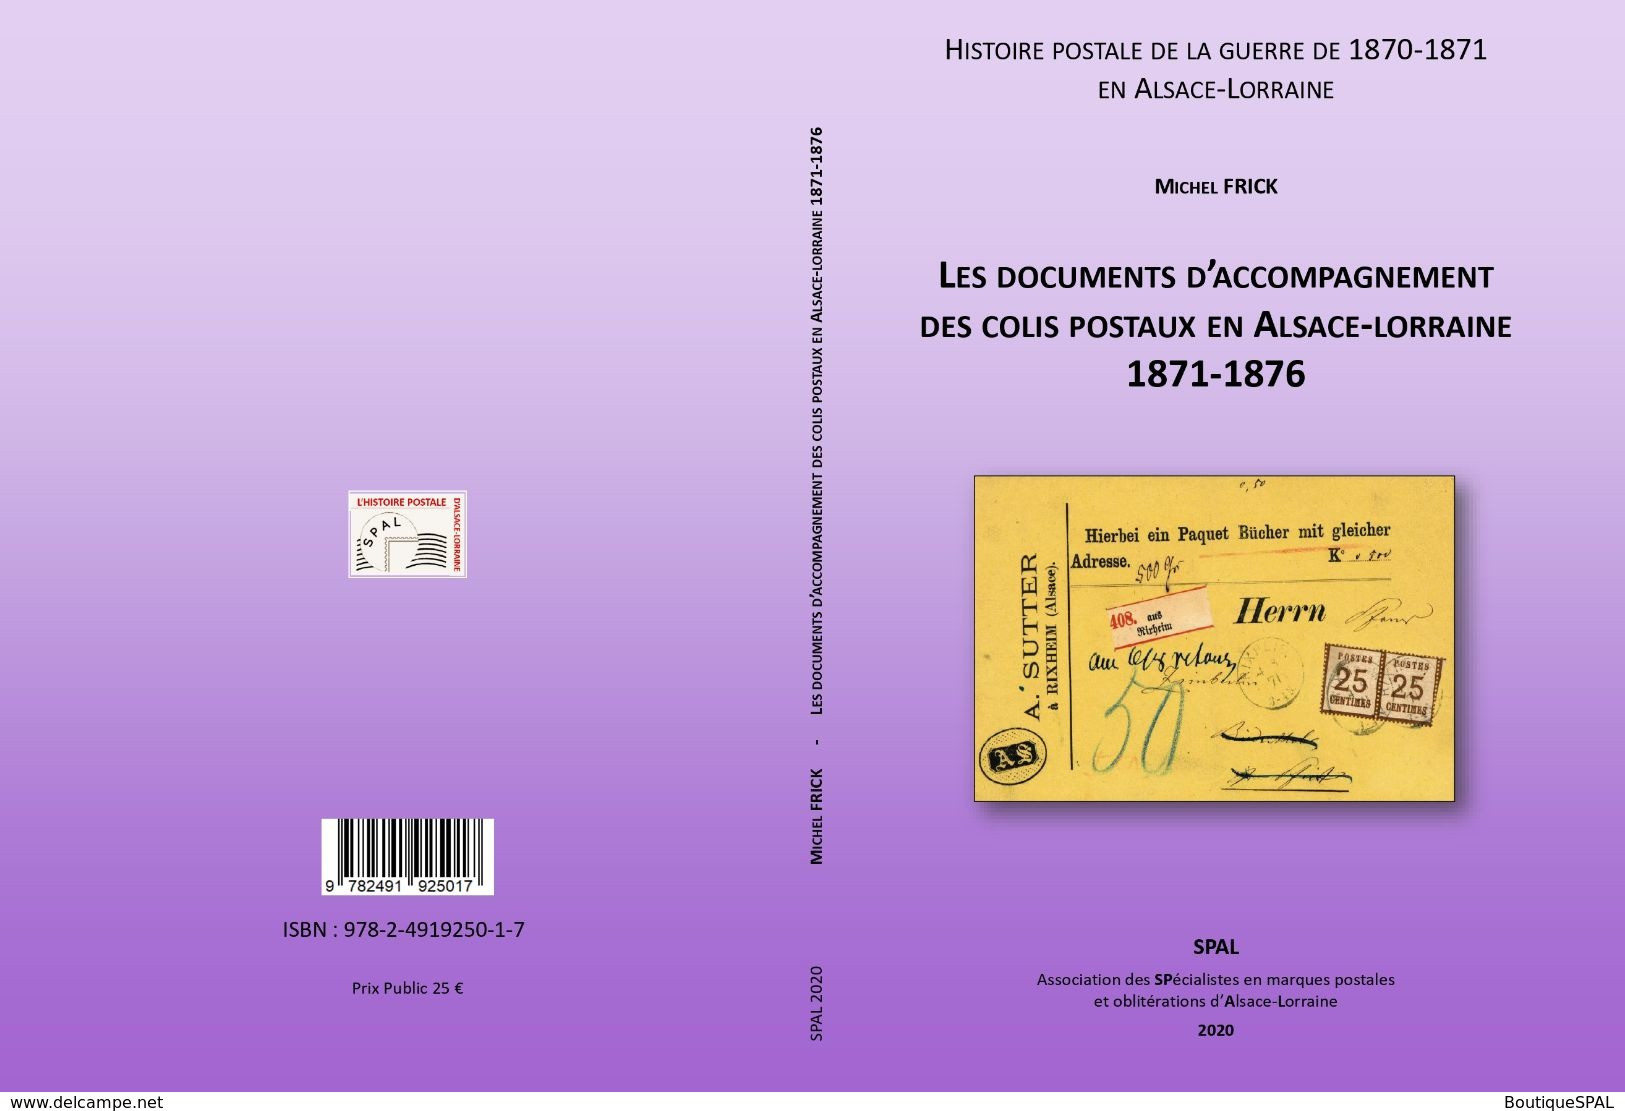 Les Documents D'accompagnement Des Colis Postaux D'Alsace-Lorraine 1871-1876 - Elsass Lothringen - SPAL 2020 - Military Mail And Military History